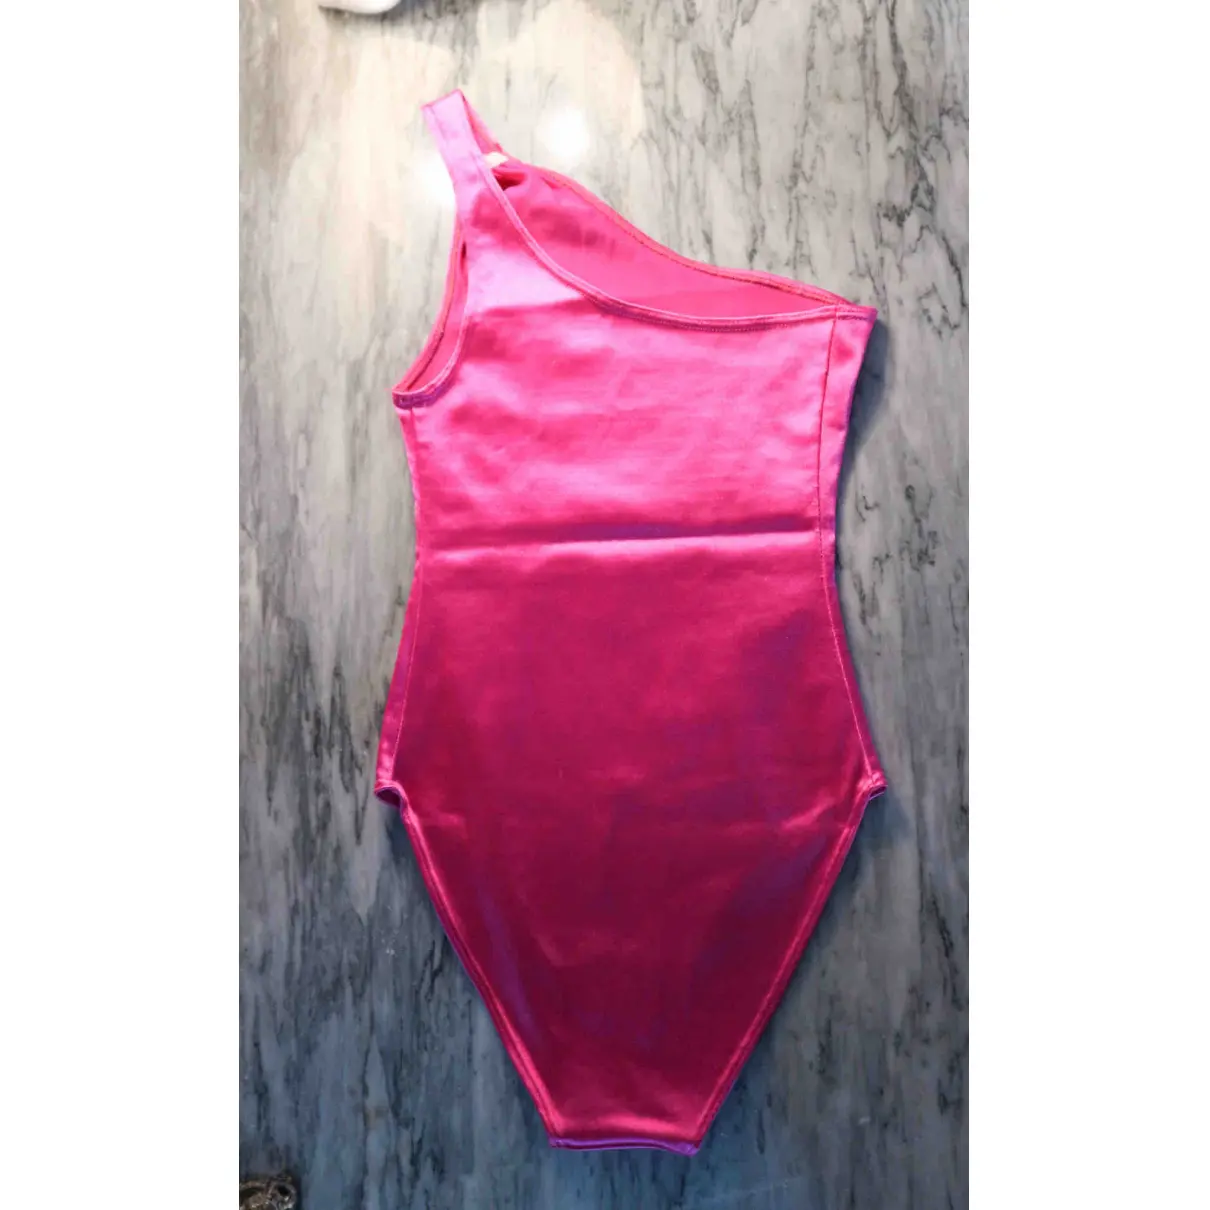 Buy Dior One-piece swimsuit online - Vintage